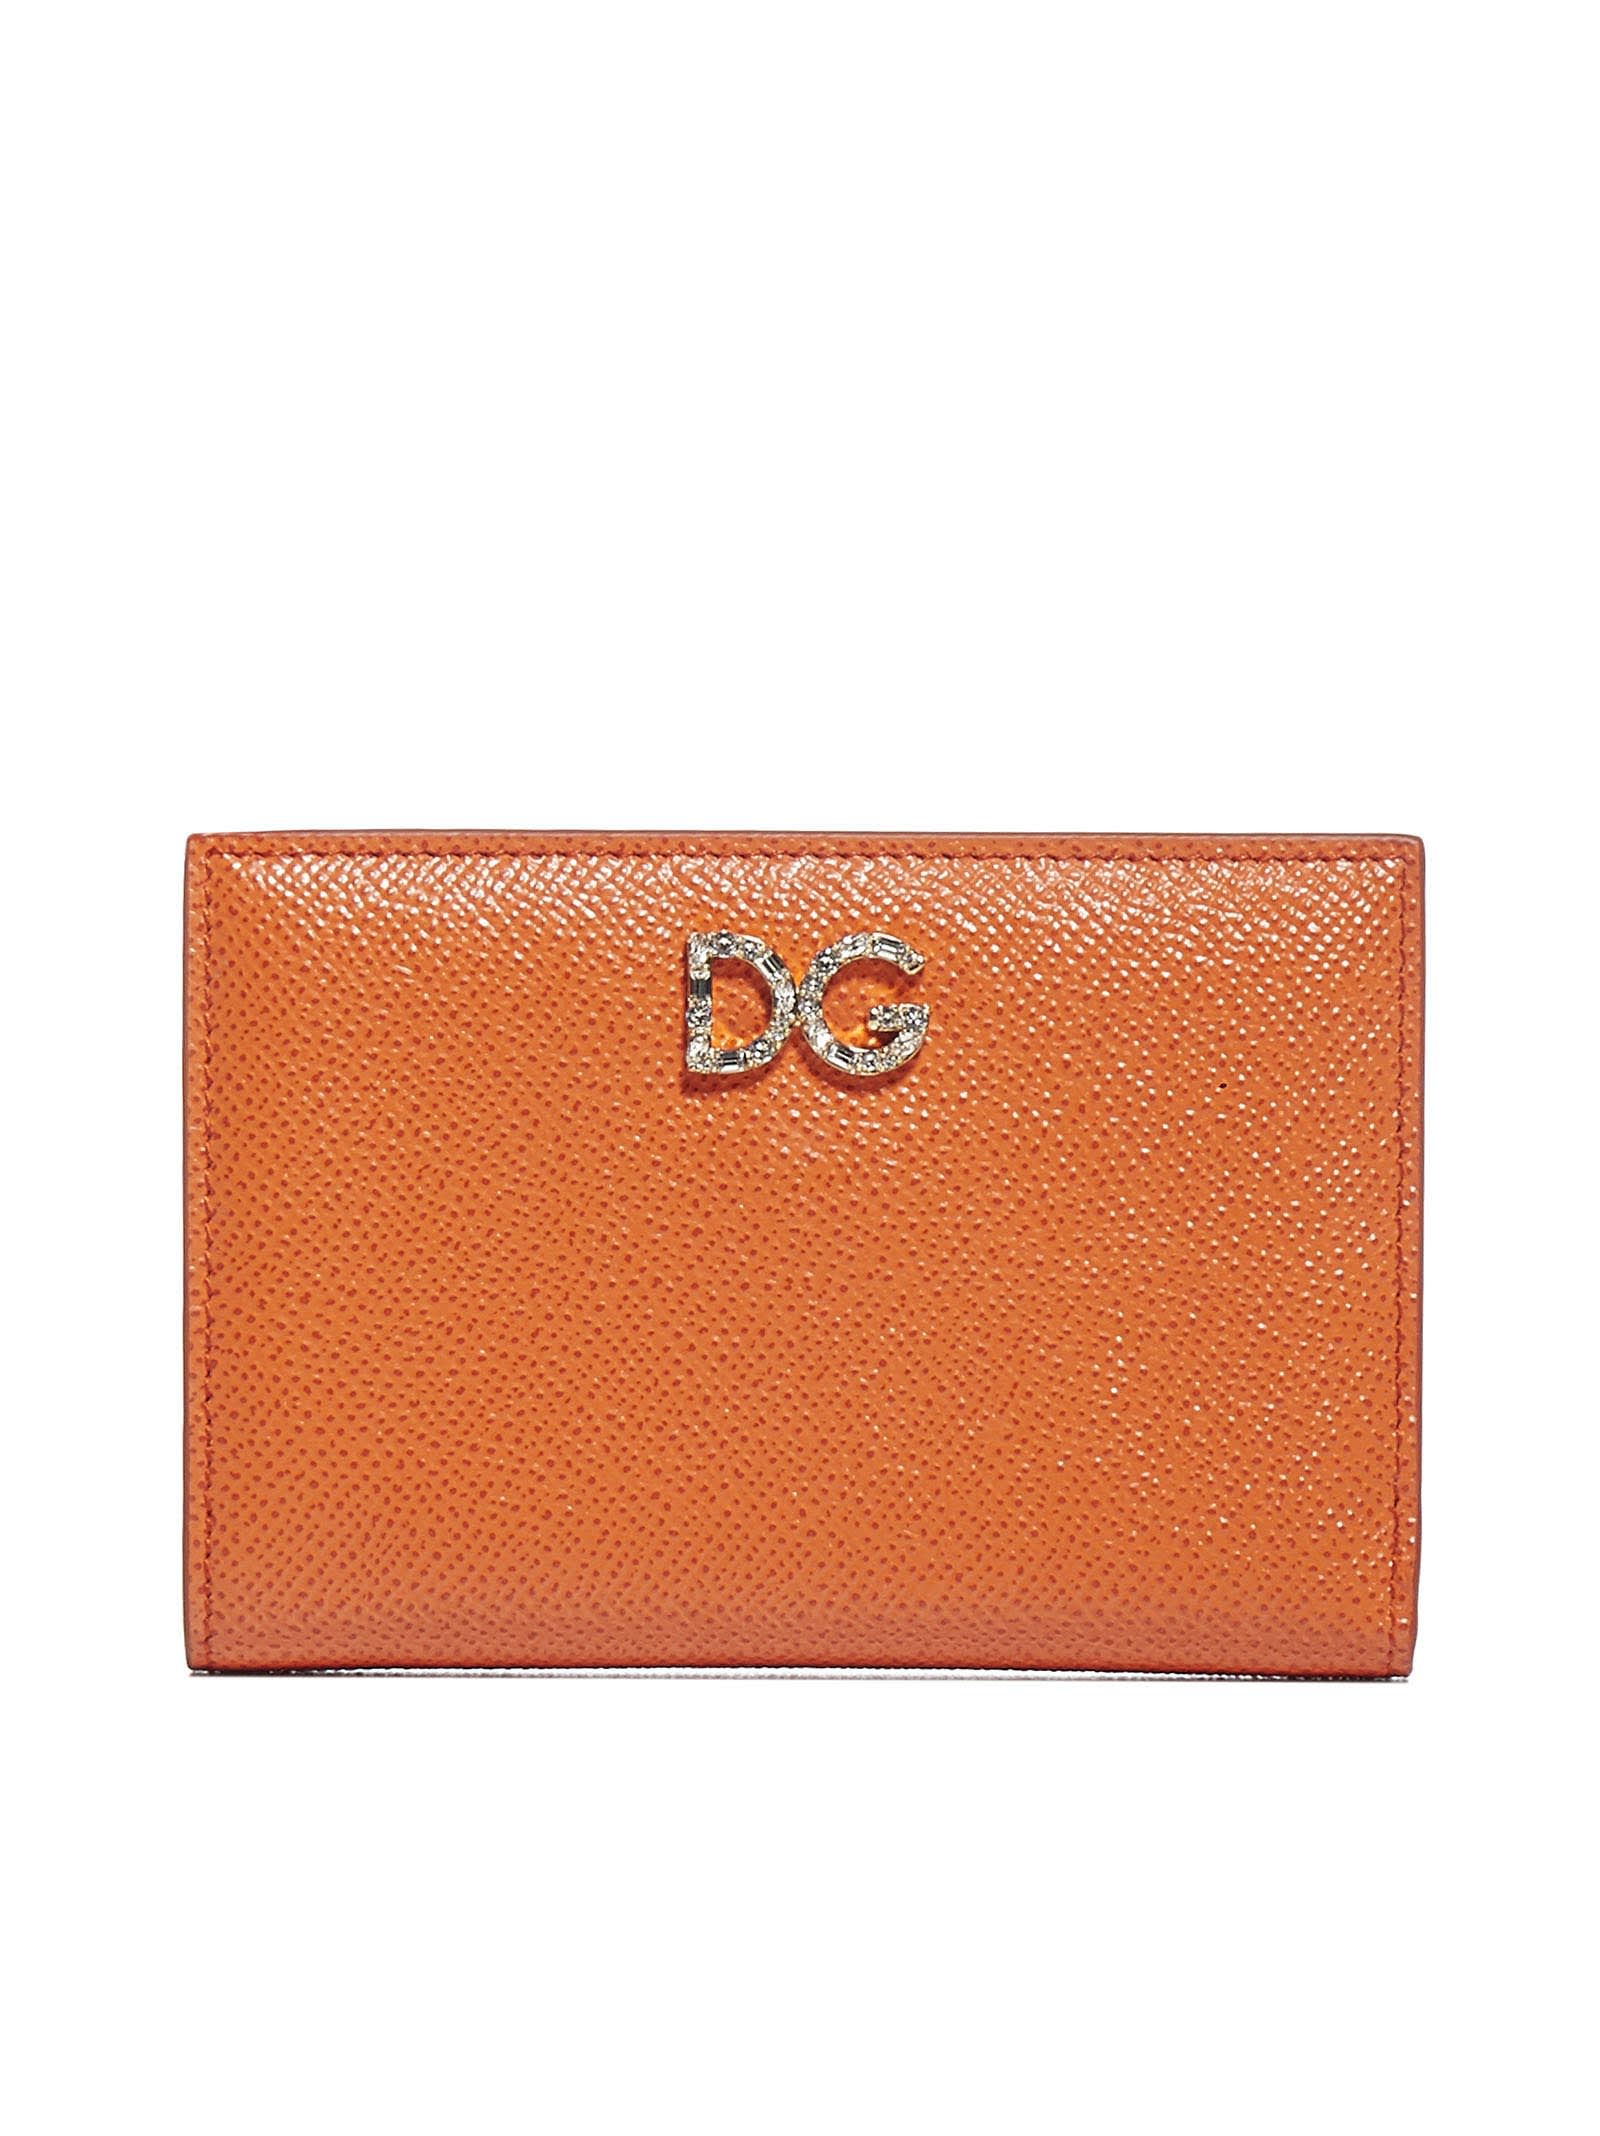 Dolce & Gabbana Logo Leather Bifold Wallet